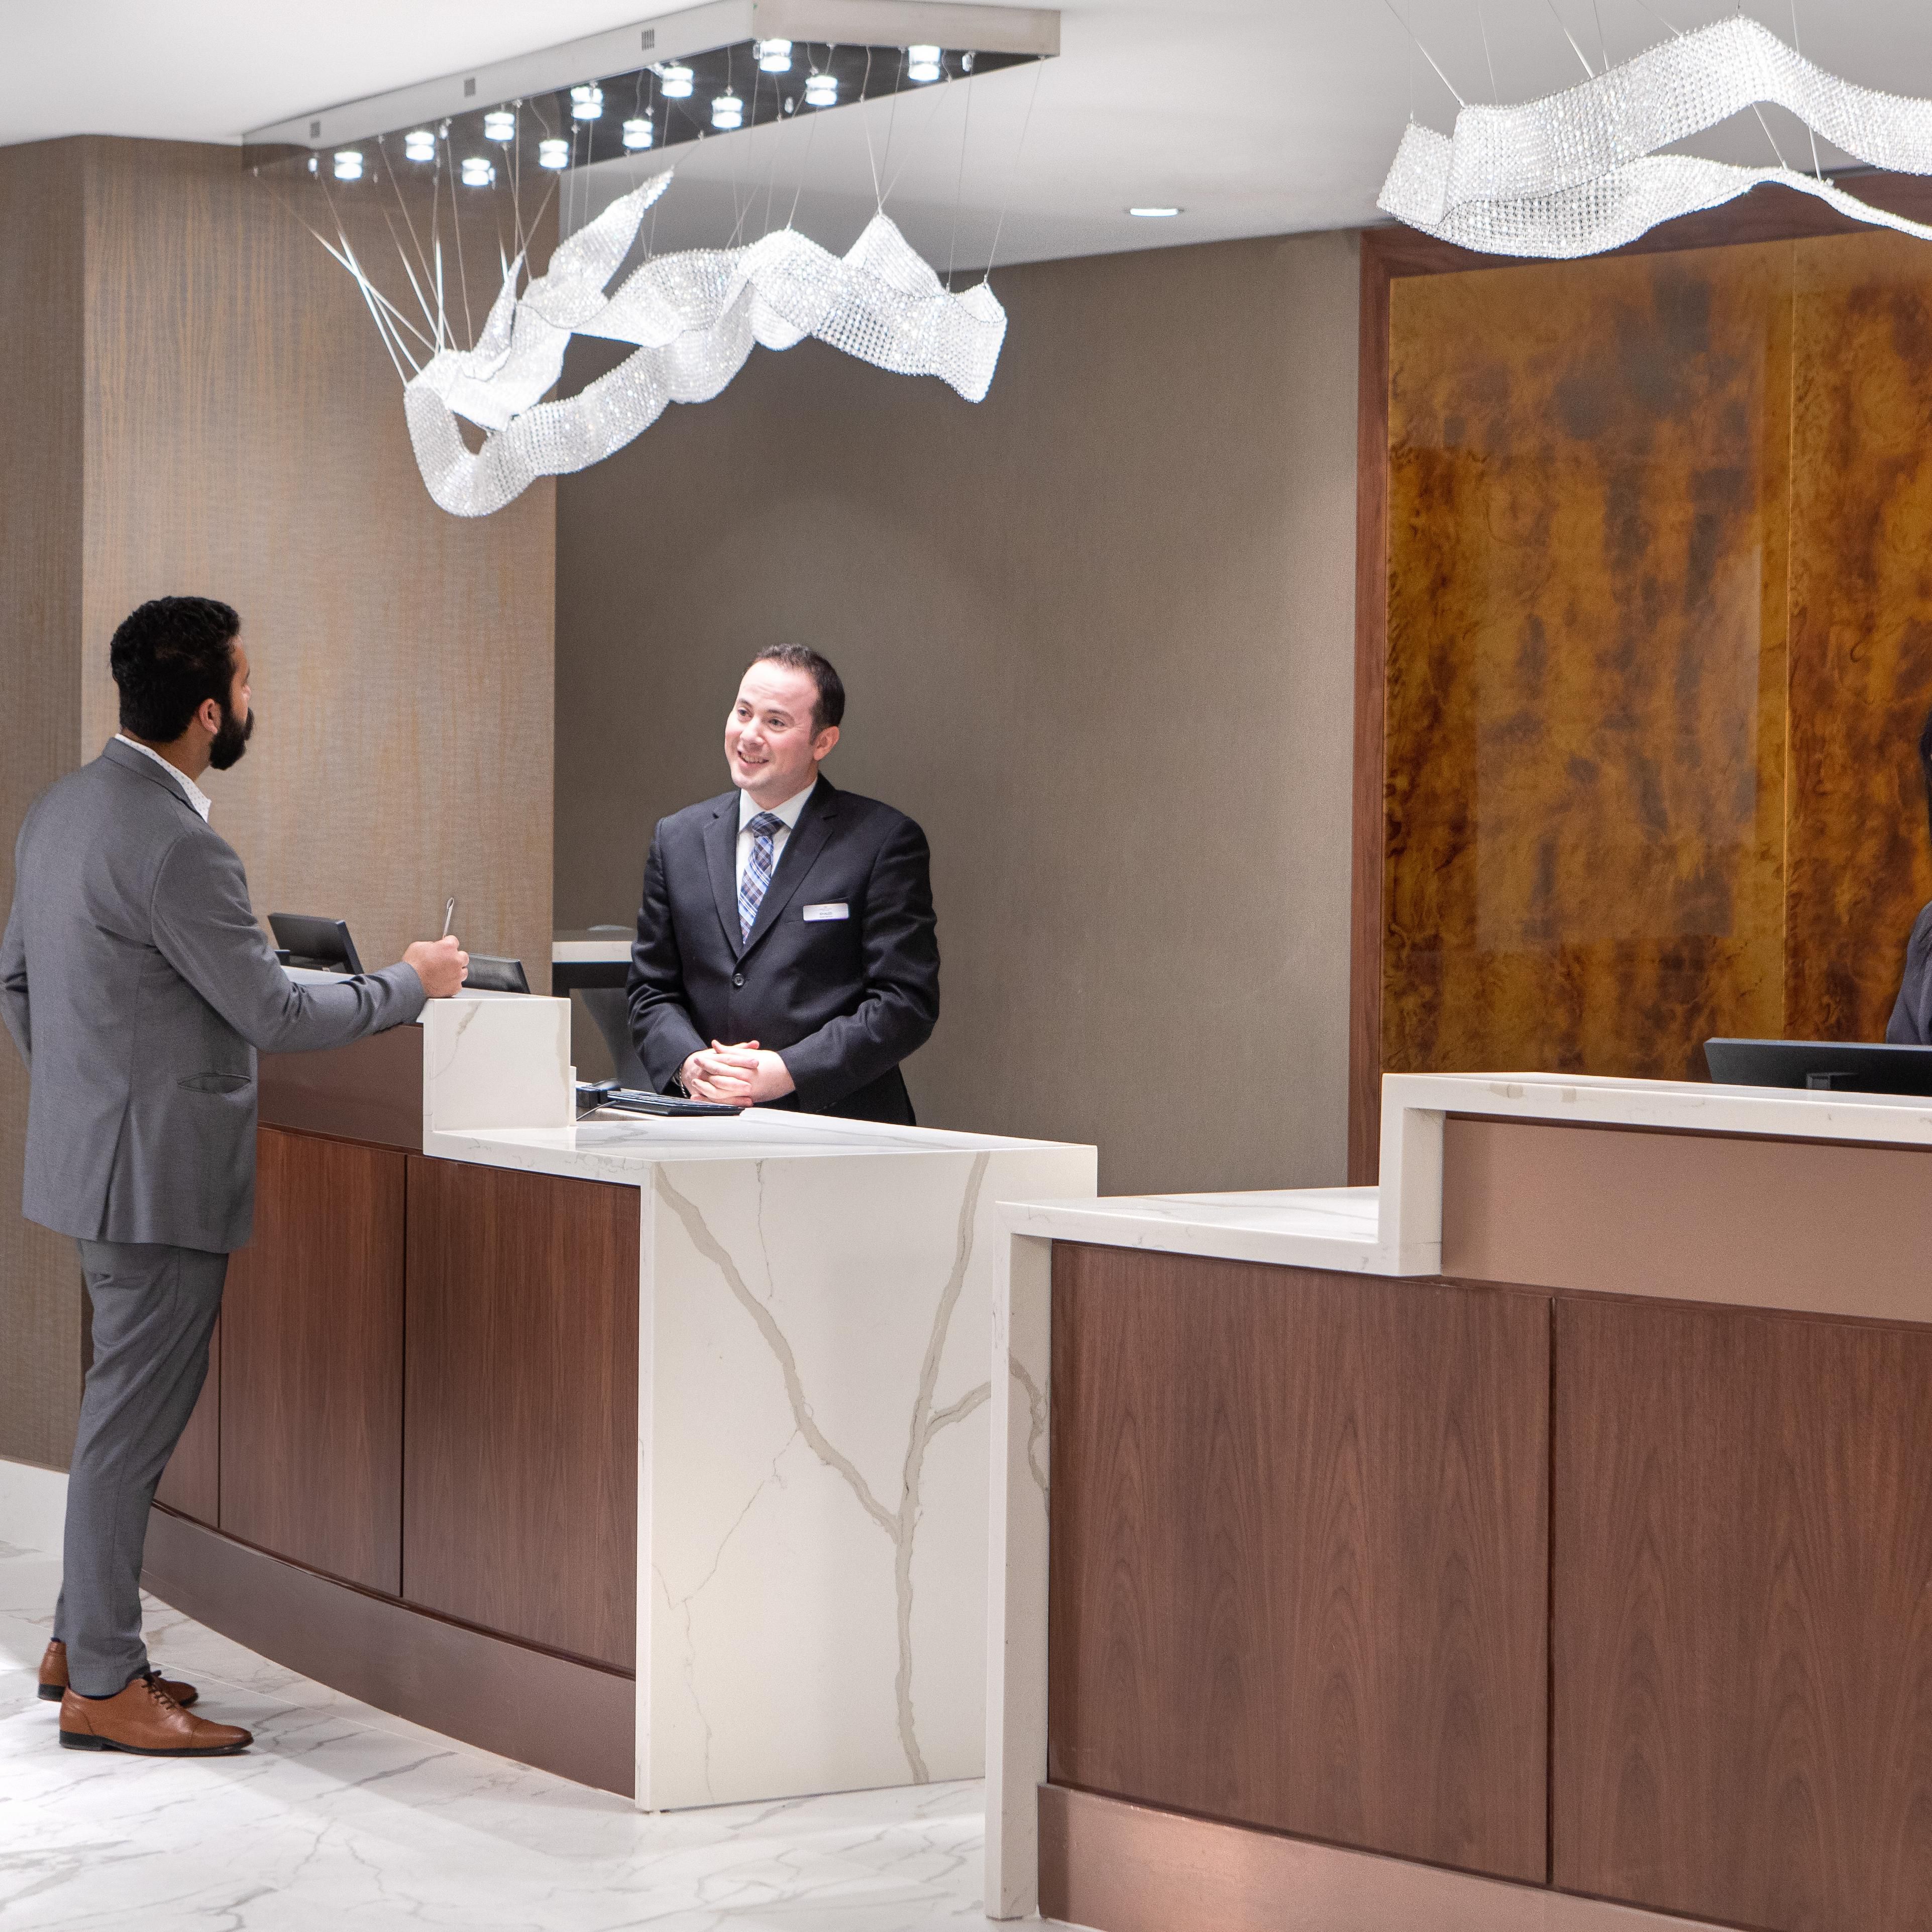 A premium, upscale Toronto Airport hotel experience awaits you 